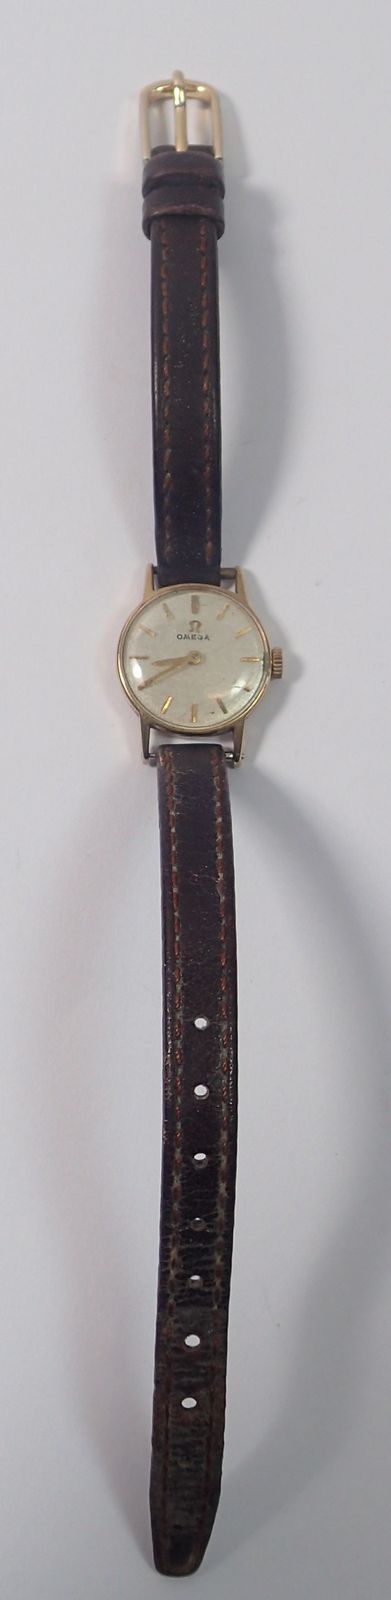 A 9 carat gold Omega ladies wrist watch - Image 2 of 3